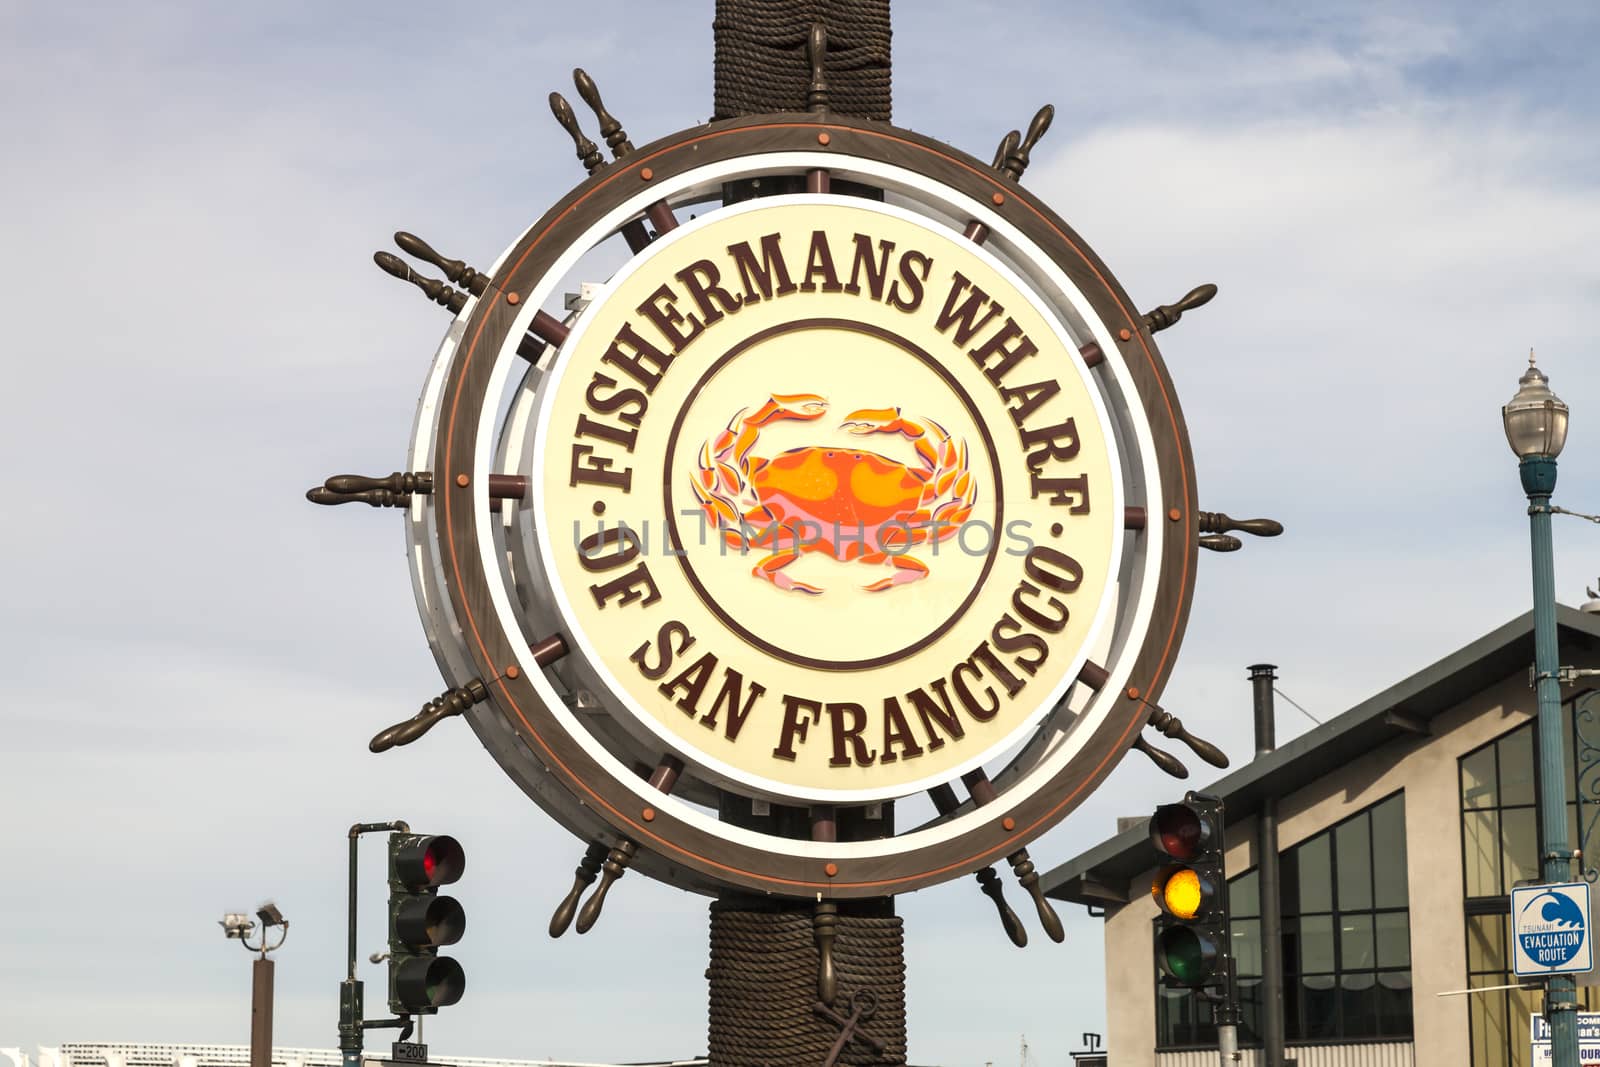 San Francisco, USA - November 12: Fishermans Wharf of San Francisco central sign. Fisherman's Wharf is a neighborhood and popular tourist attraction. November 12, 2014 , San Francisco California.